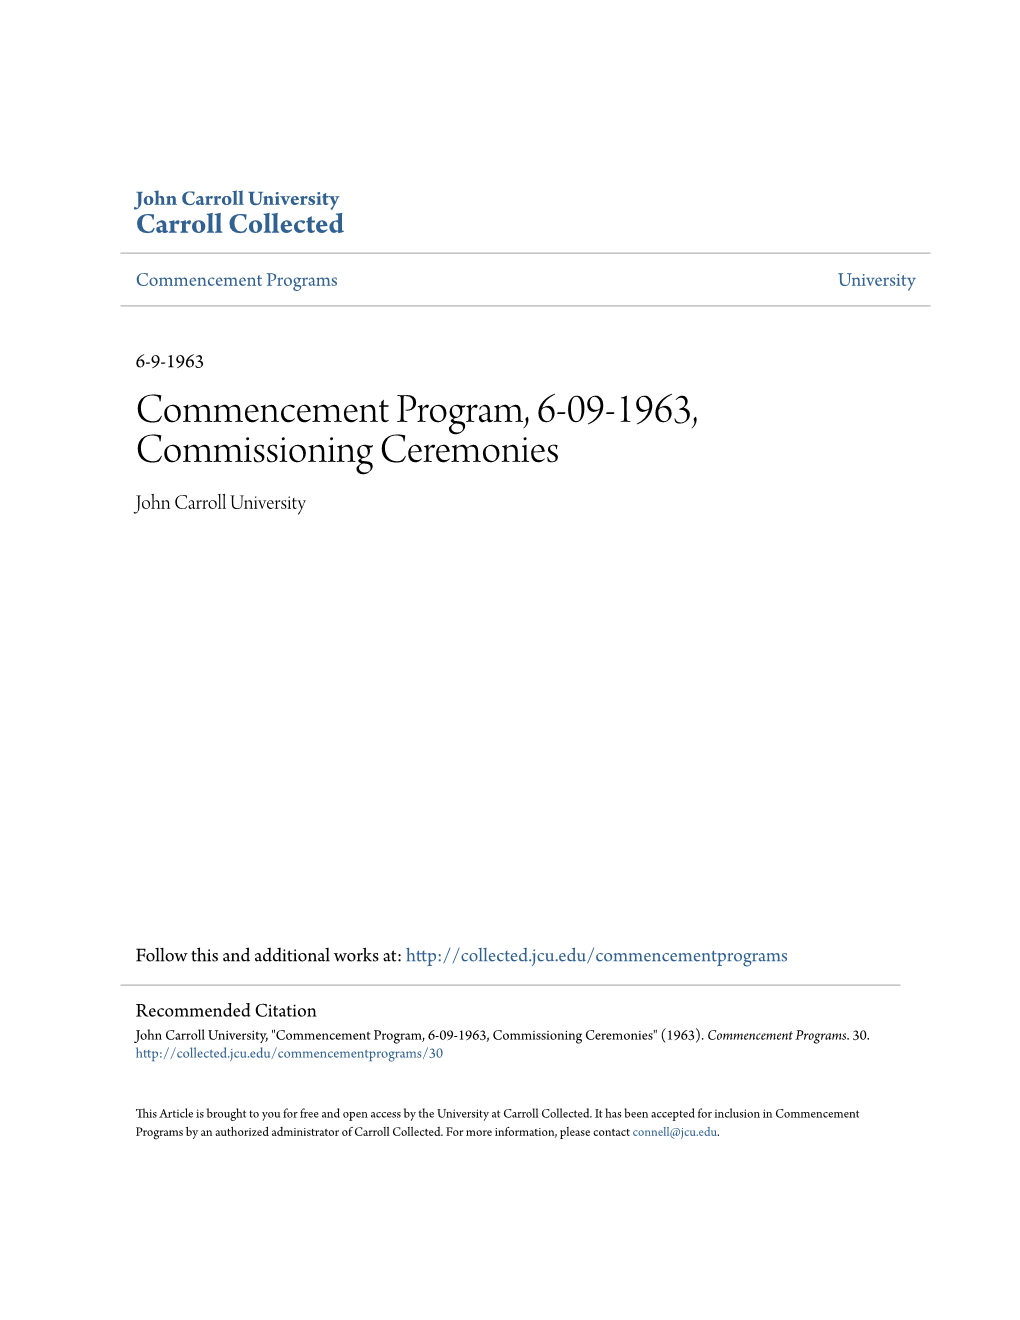 Commencement Program, 6-09-1963, Commissioning Ceremonies John Carroll University